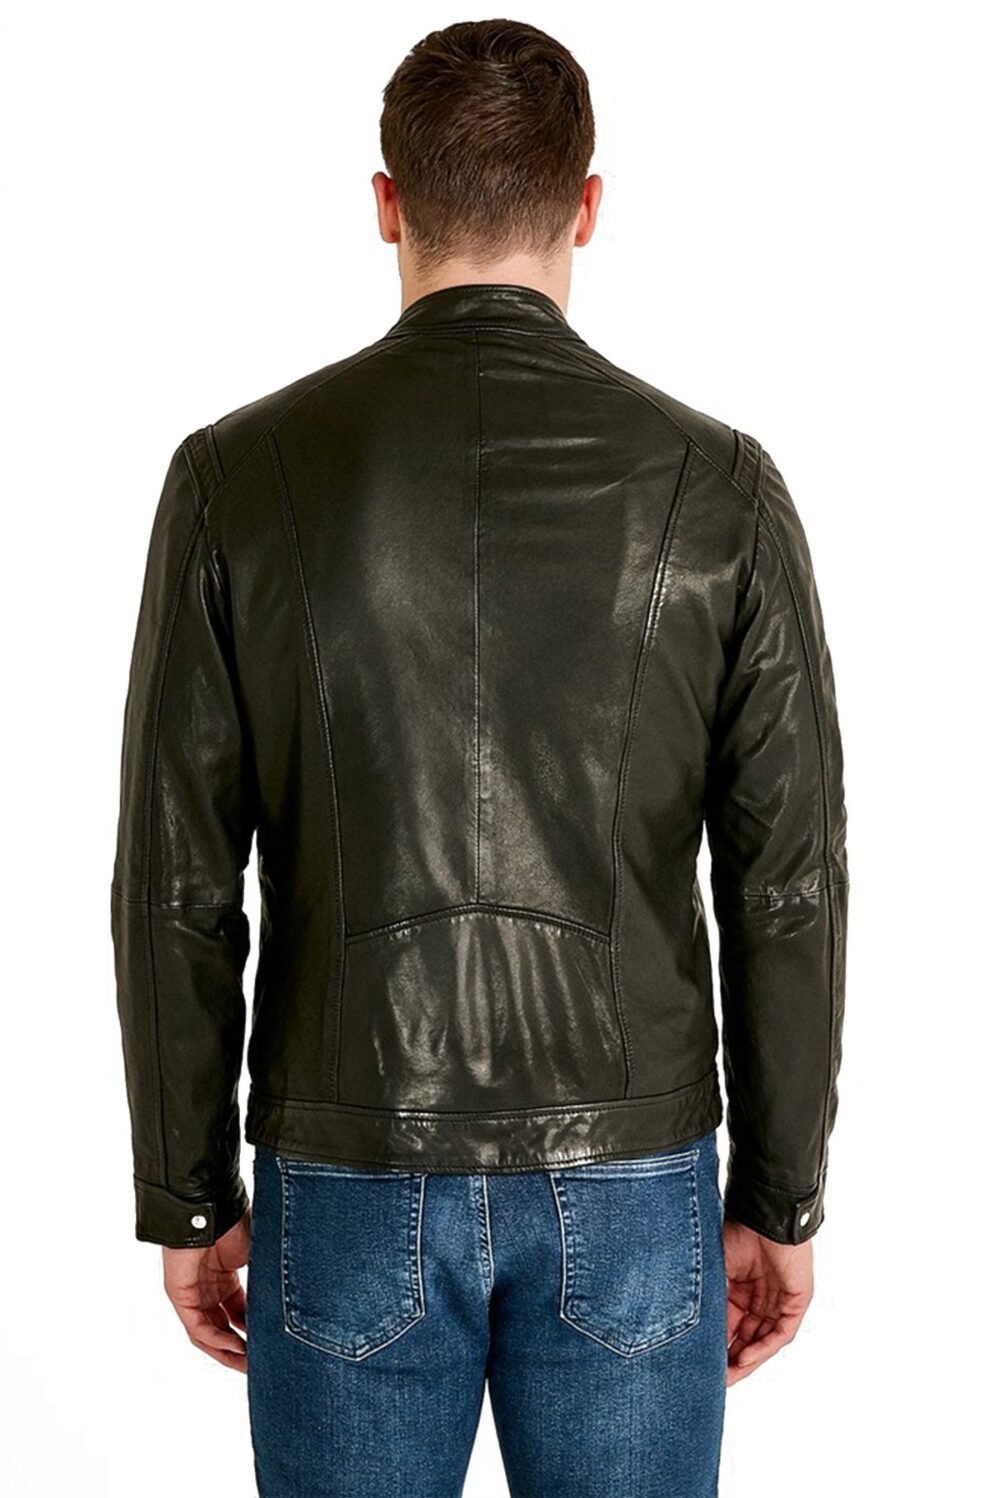 Men's Leather Jacket in Navy Blue - Urban Fashion Studio